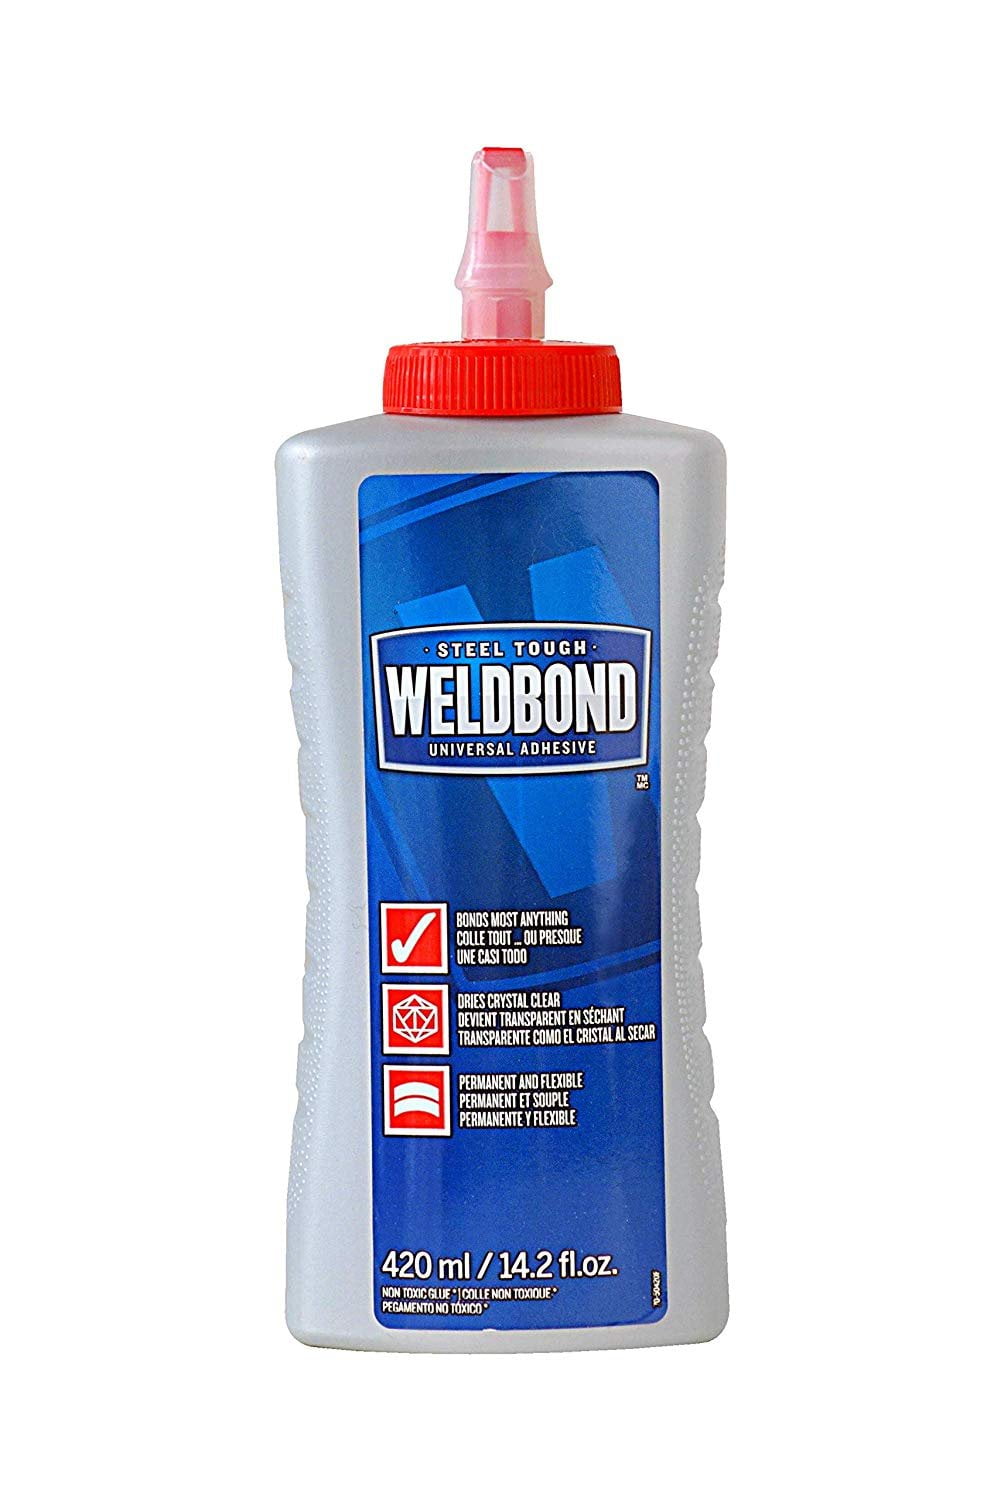  Weldbond Multi-Surface Adhesive Glue, 54oz /160ml 4